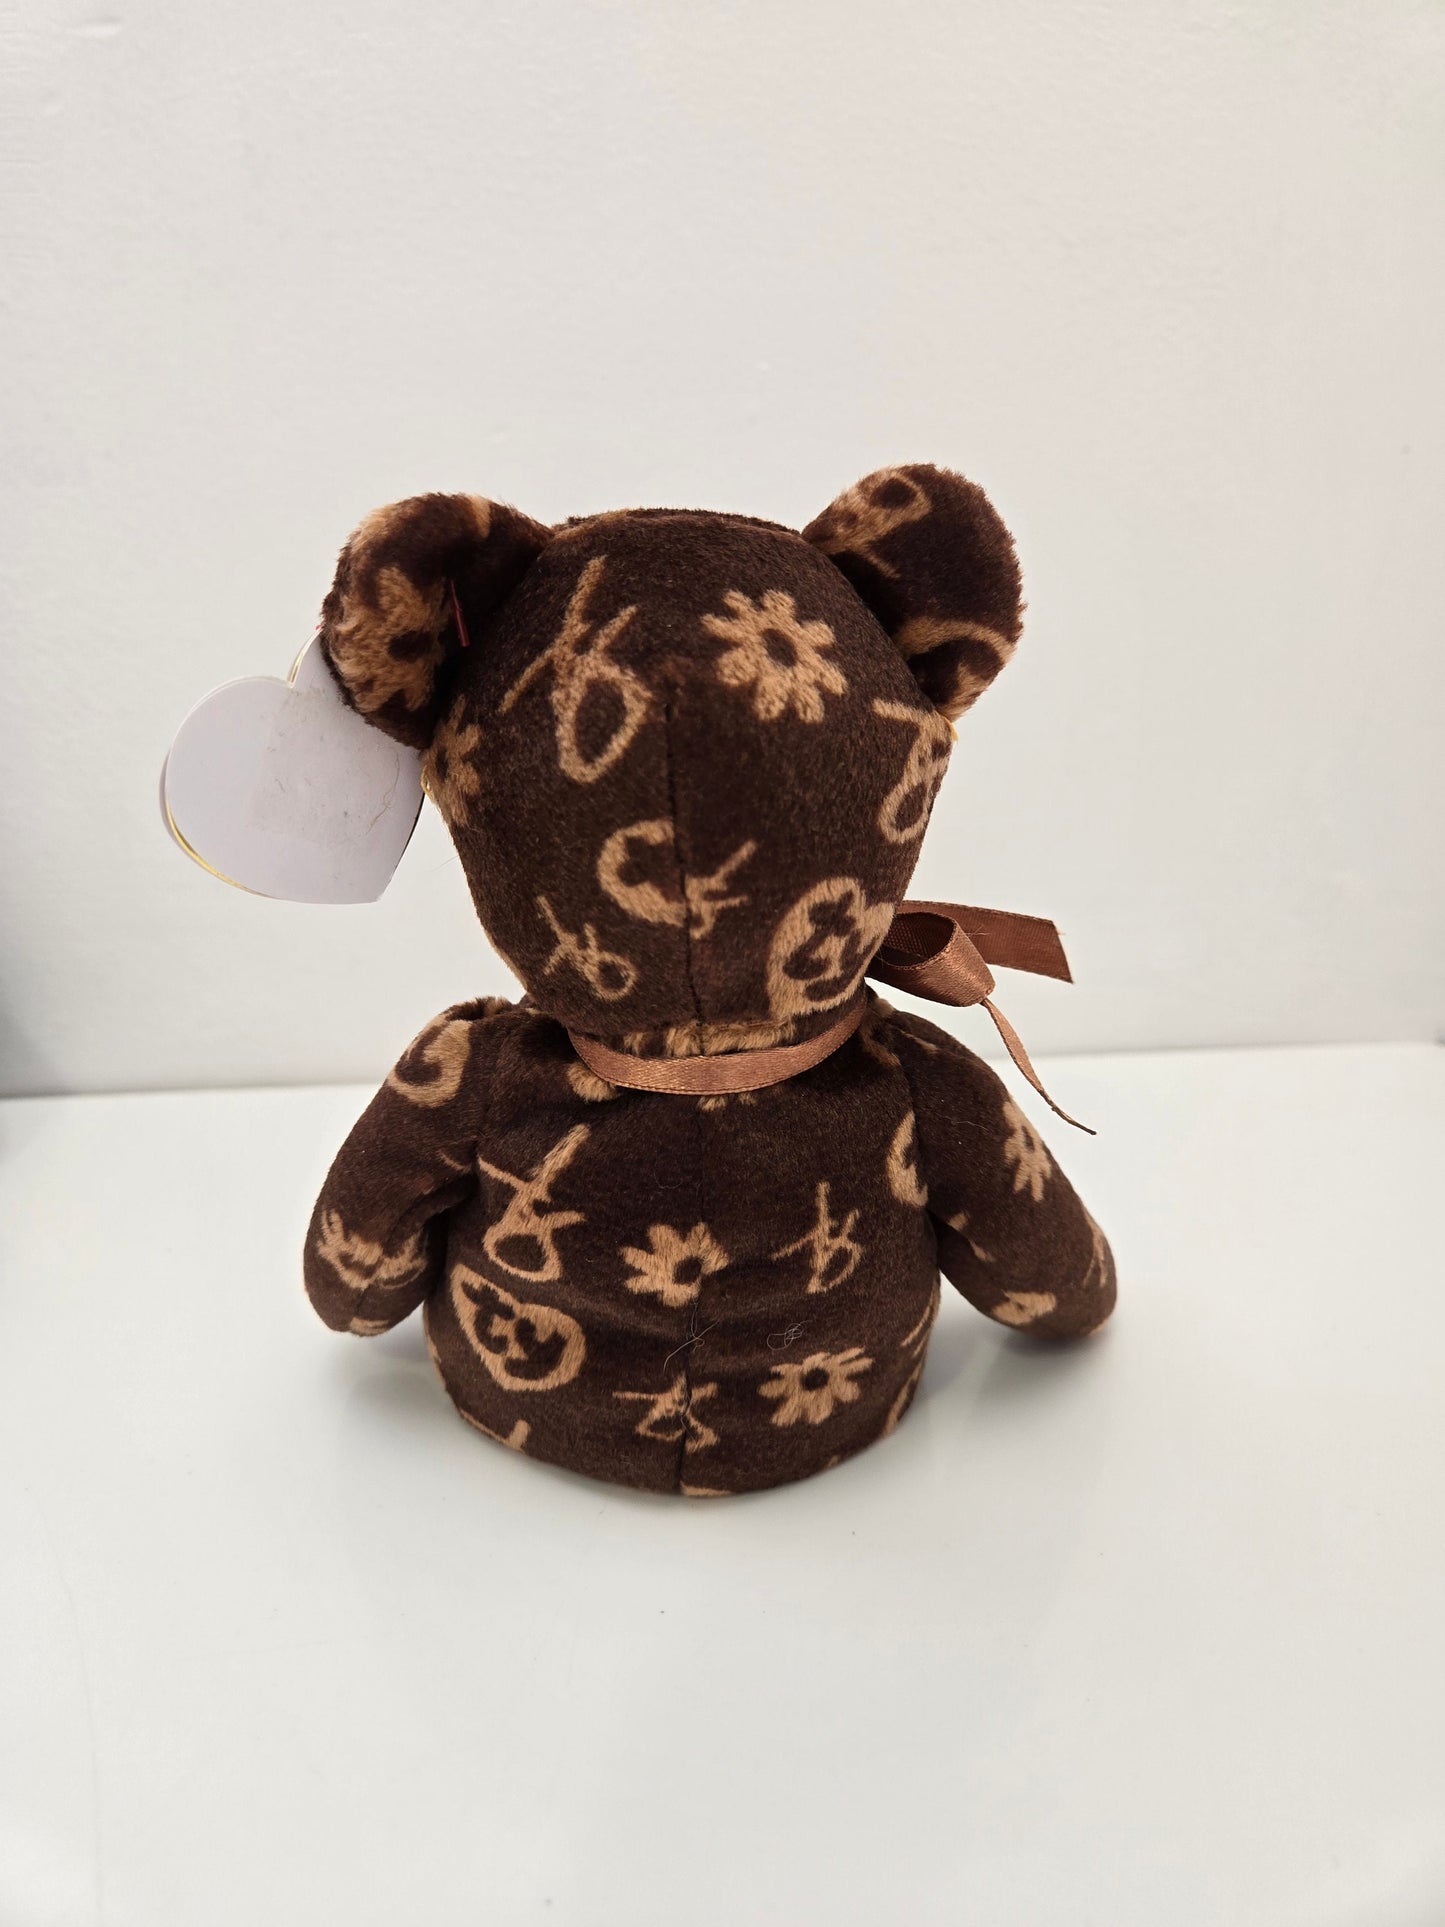 TY Beanie Baby “Signature Bear” the Bear (8.5 inch)